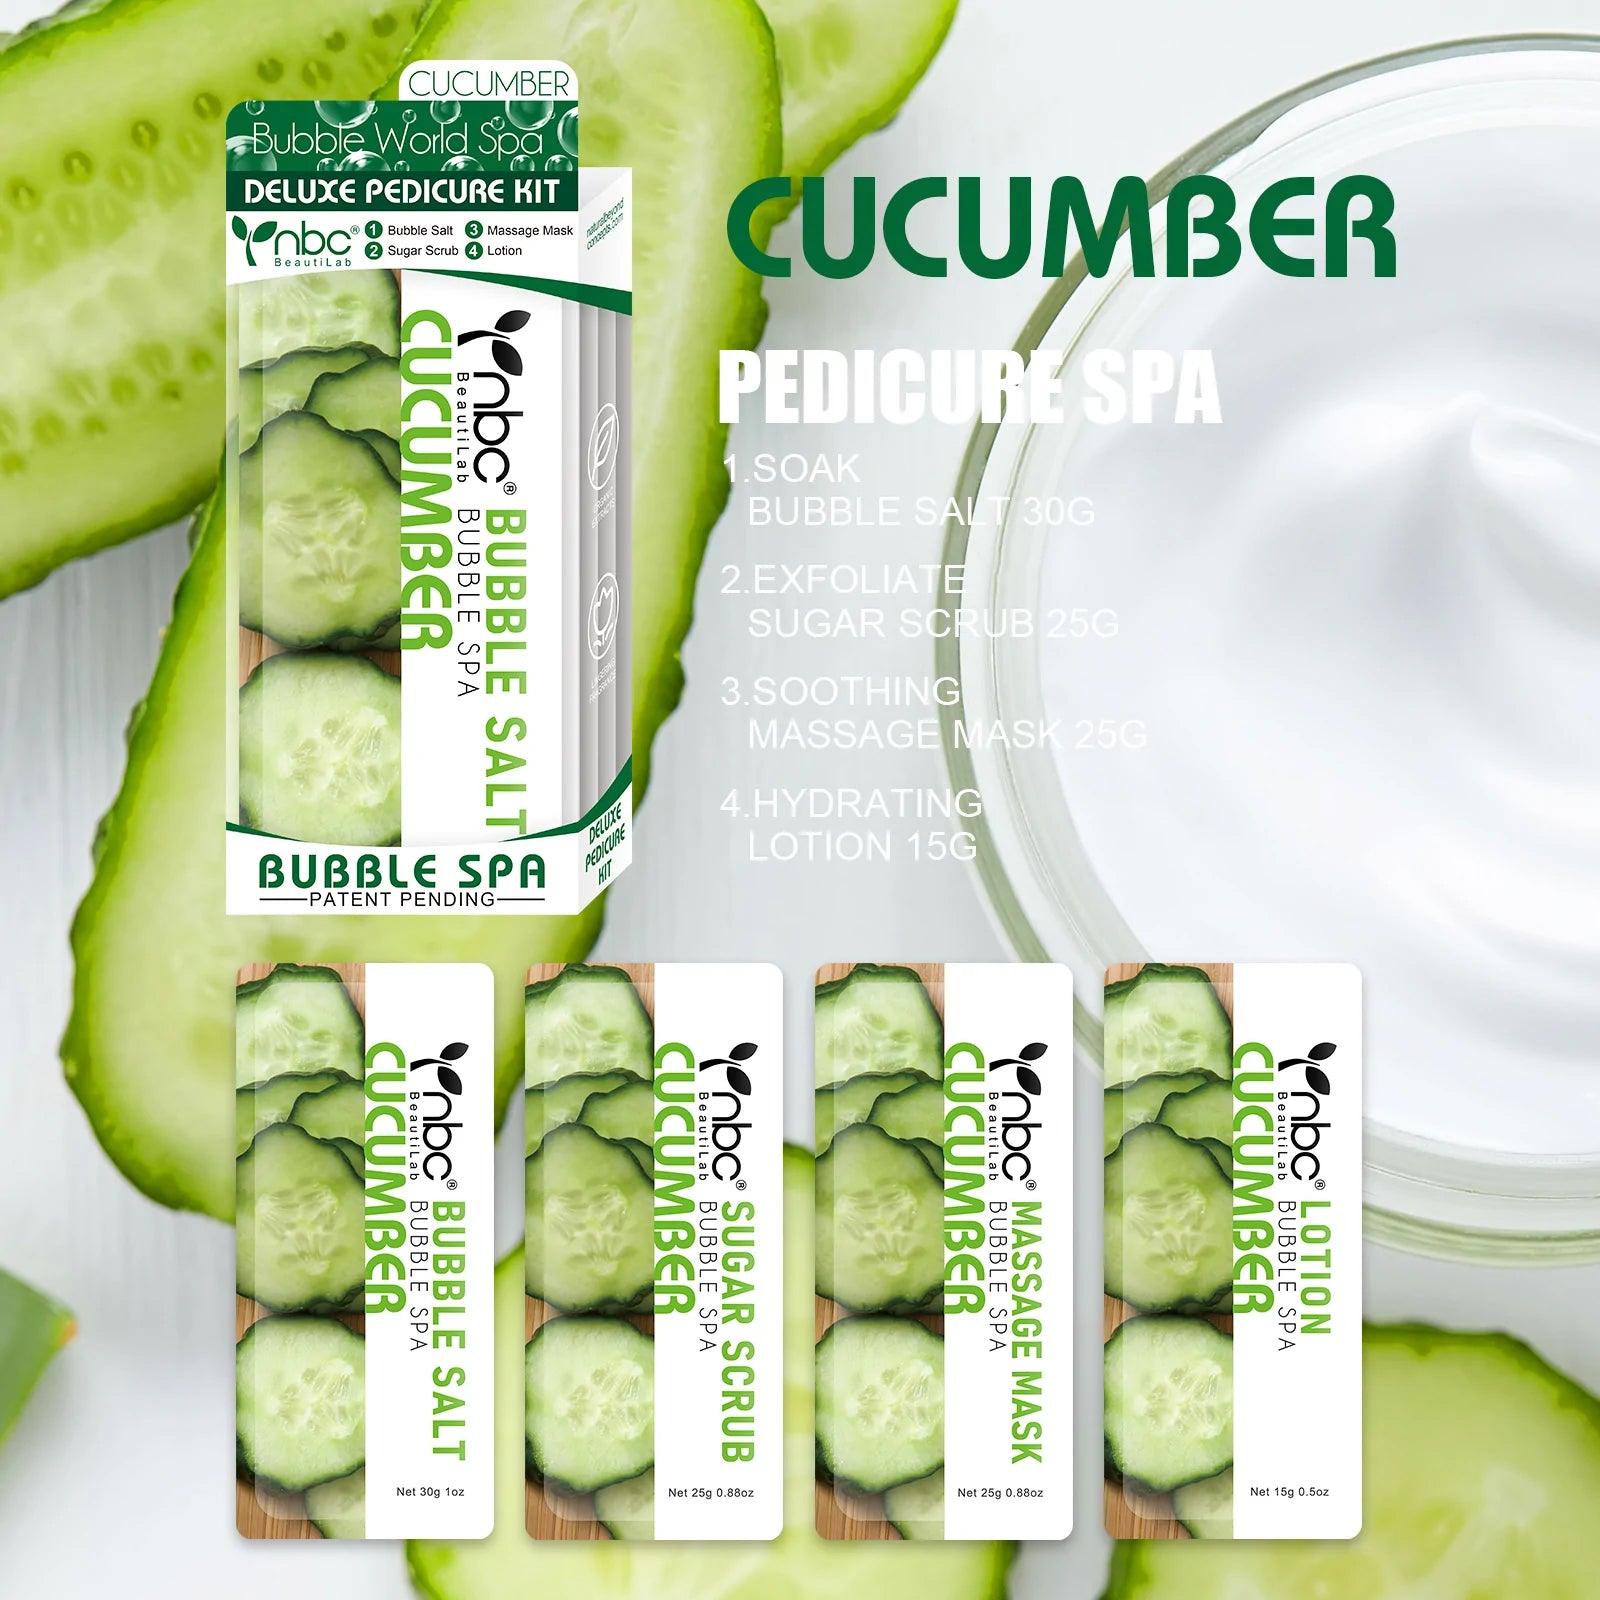 nbc Bubble Spa Pedicure Kit 4 Step - Cucumber (Pack of 50 Kits)